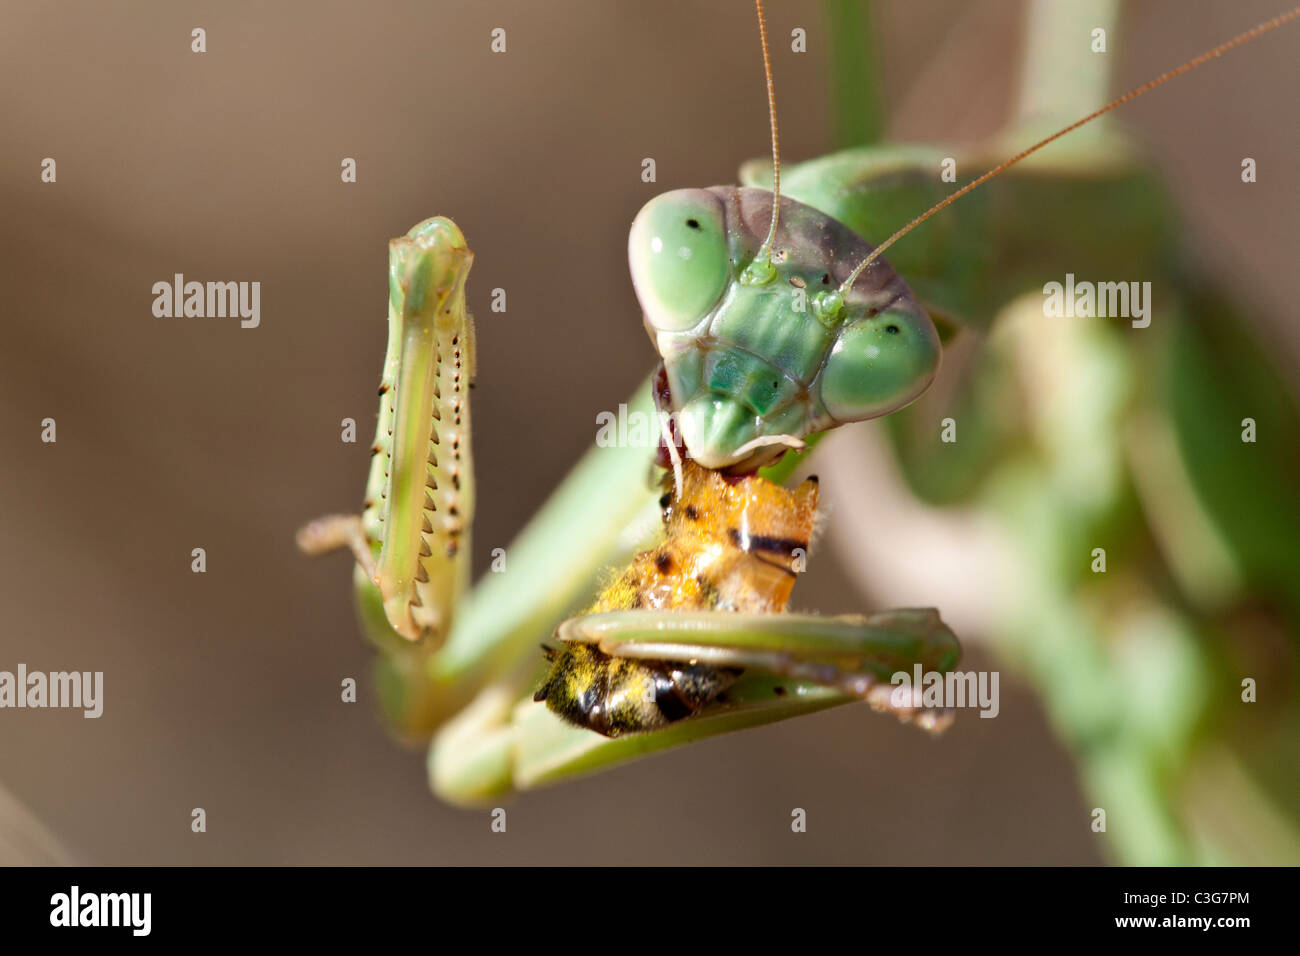 Praying mantis (Tenodera aridifolia) eating honeybee. Stock Photo